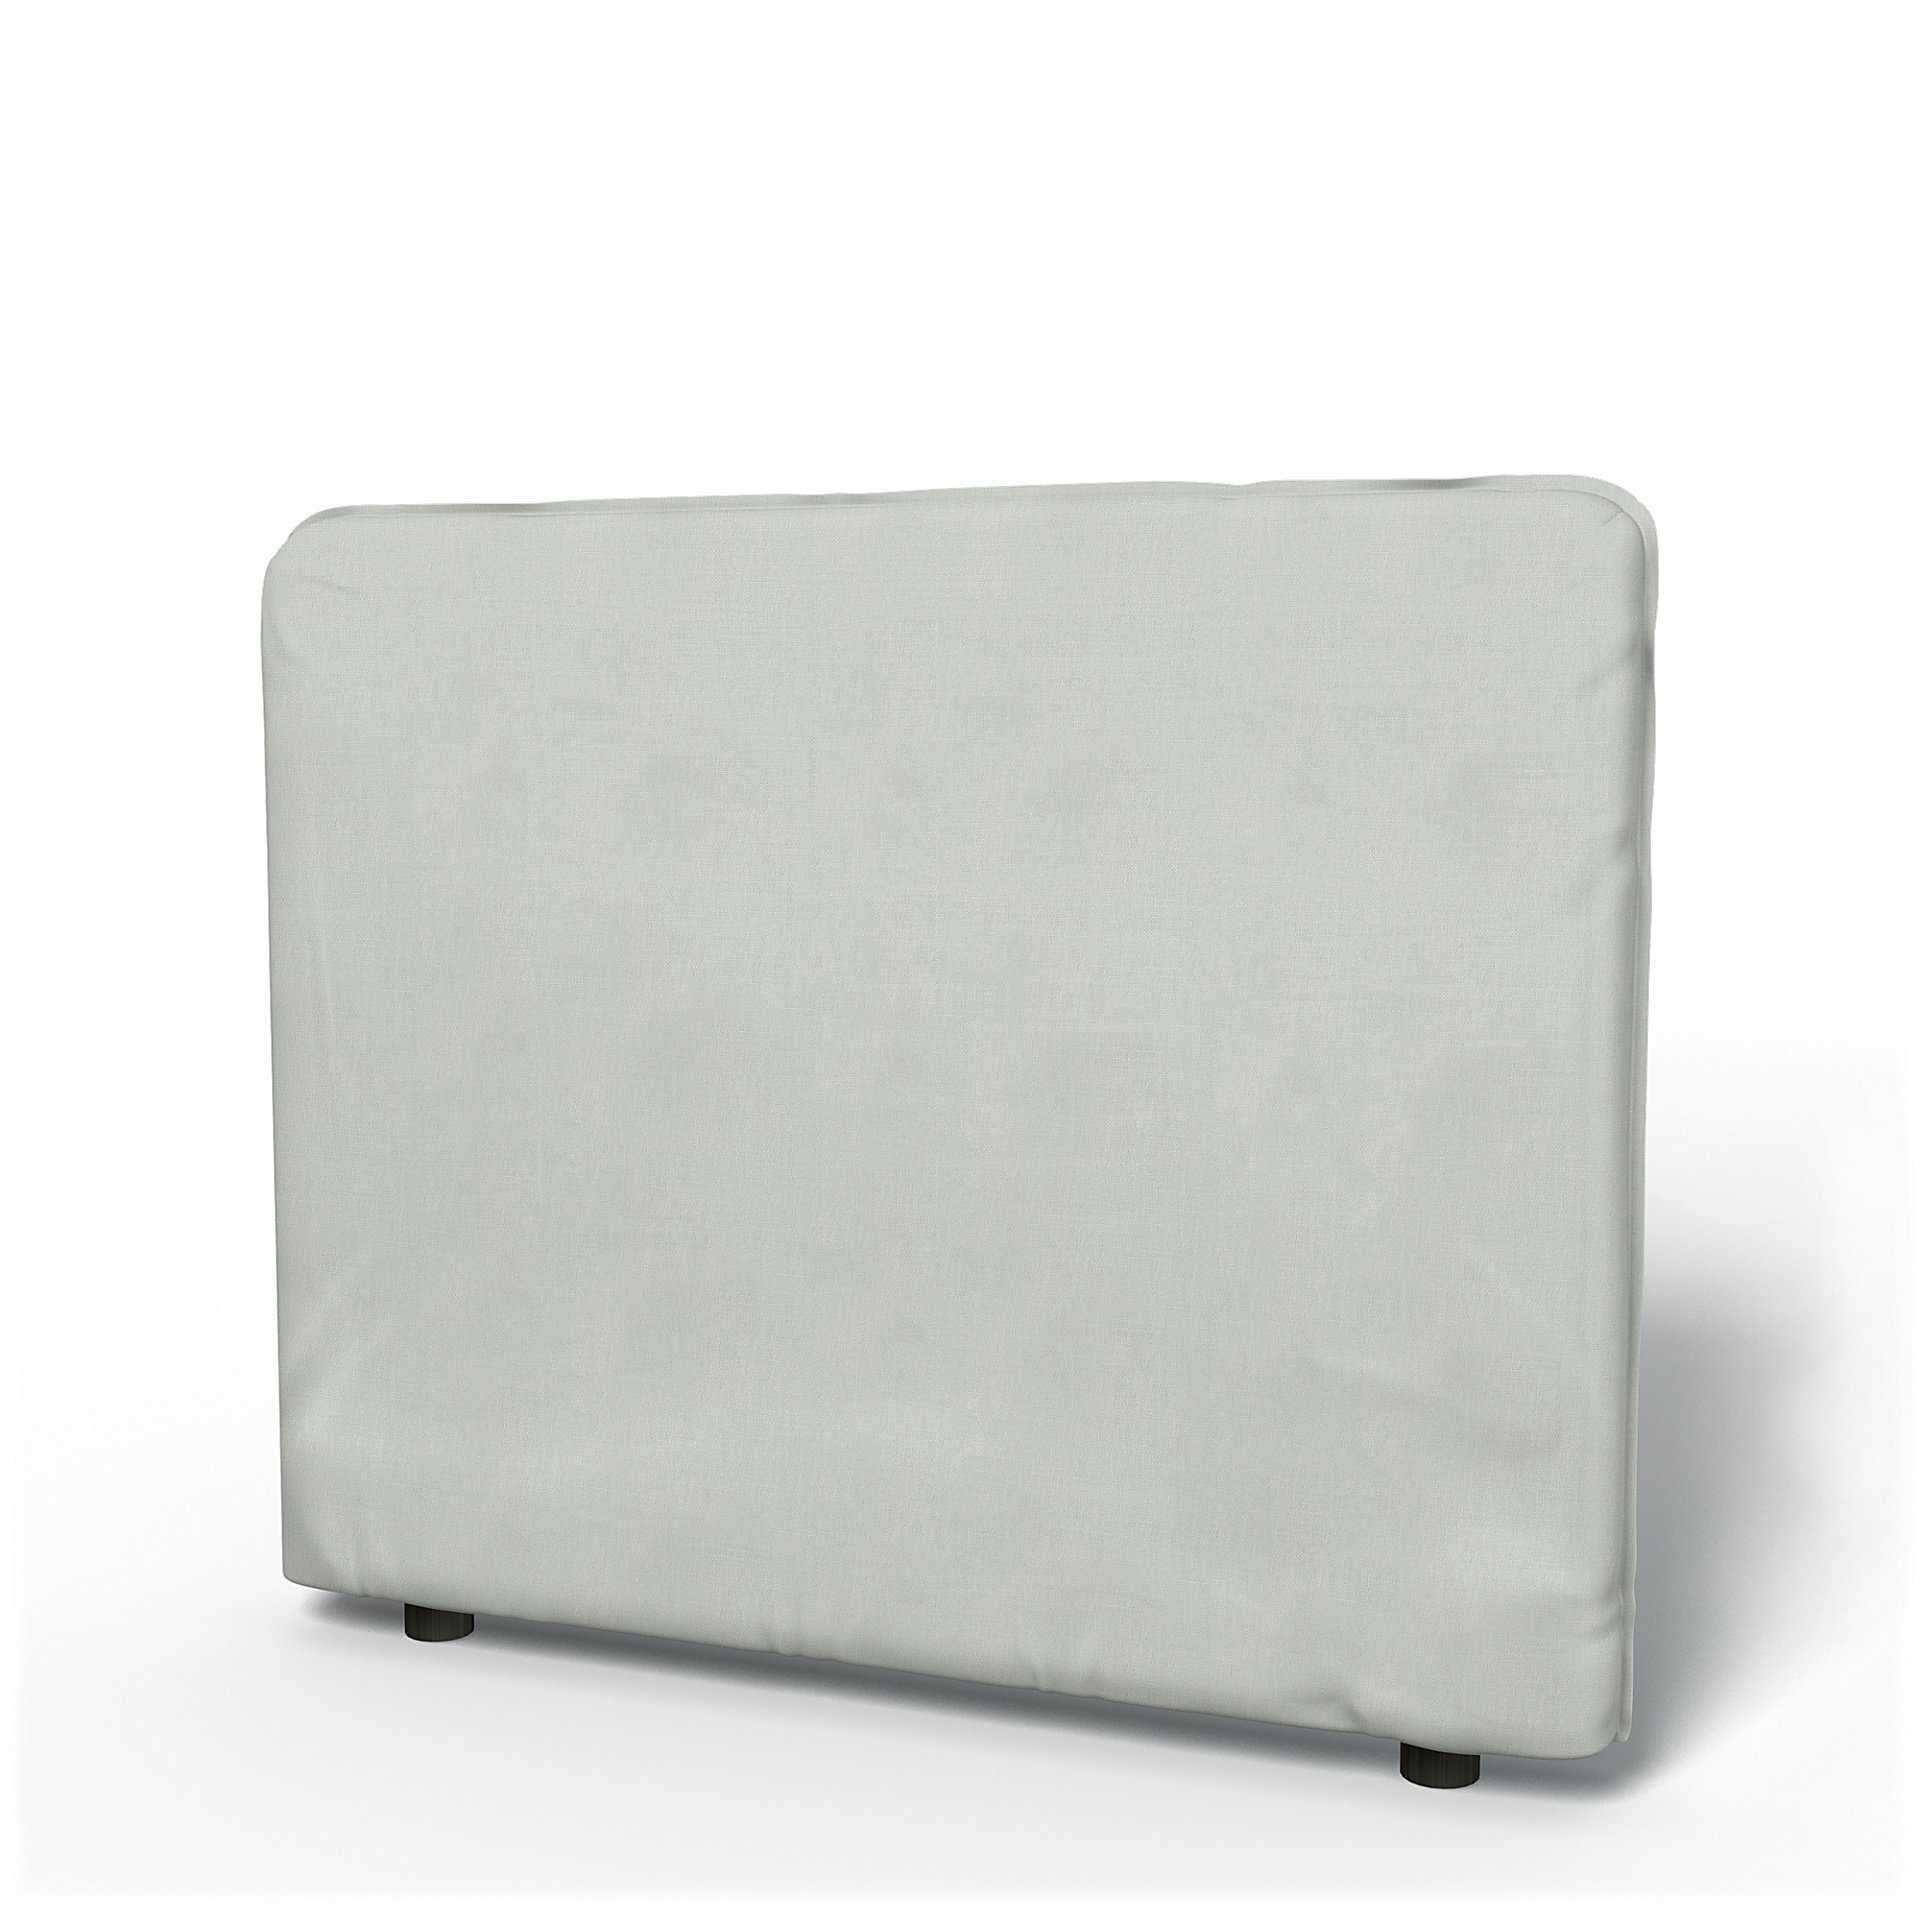 IKEA - Vallentuna Low Backrest Cover 100x80cm 39x32in, Silver Grey, Linen - Bemz